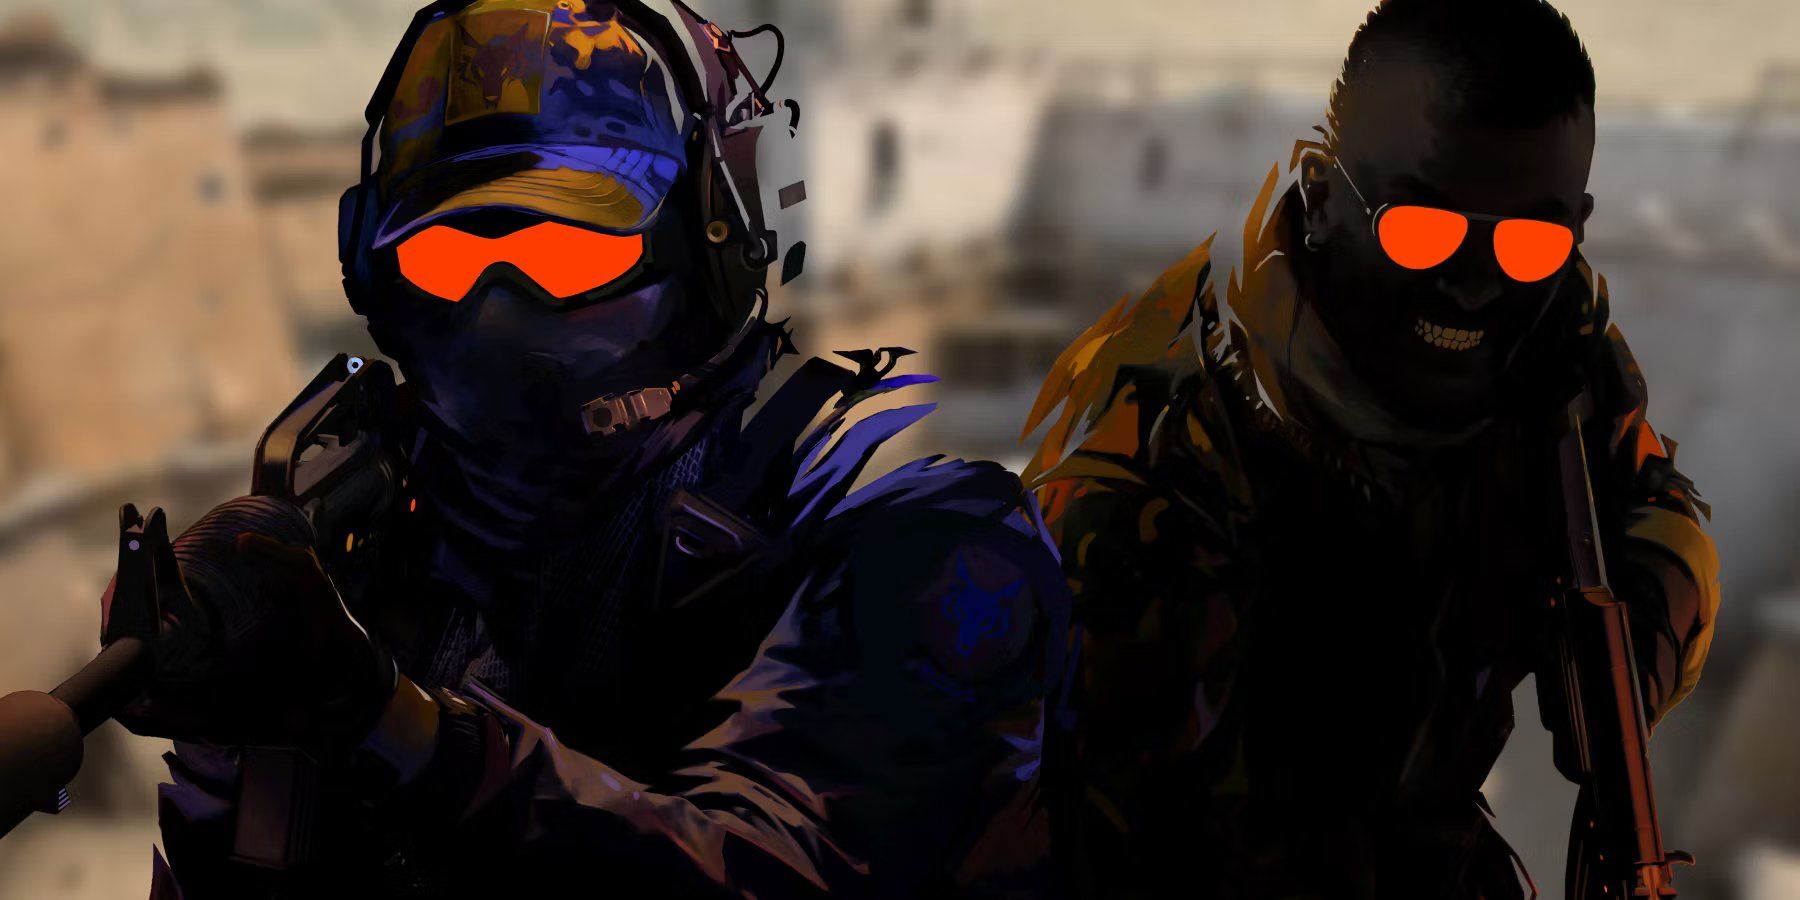 Counter-Strike 2 revealed: Source 2 update overhauls CS:GO maps